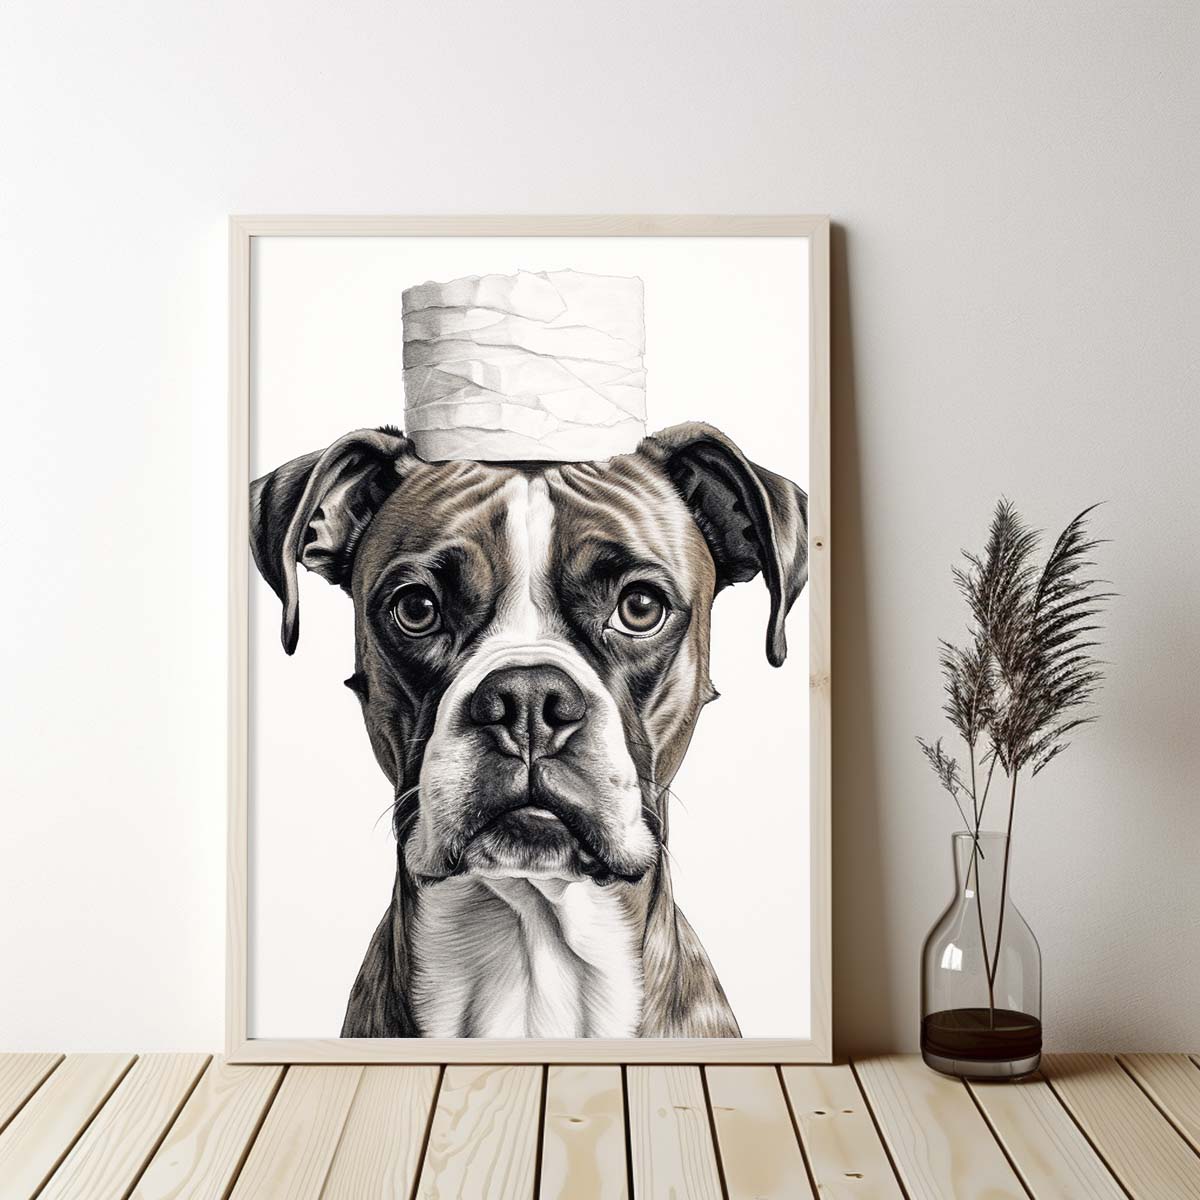 Boxer Dog With Toilet Paper Canvas Art, Boxer Dog With Toilet Paper, Funny Dog Art, Bathroom Wall Decor, Home Decor, Bathroom Wall Art, Dog Wall Decor, Animal Decor, Pet Gift